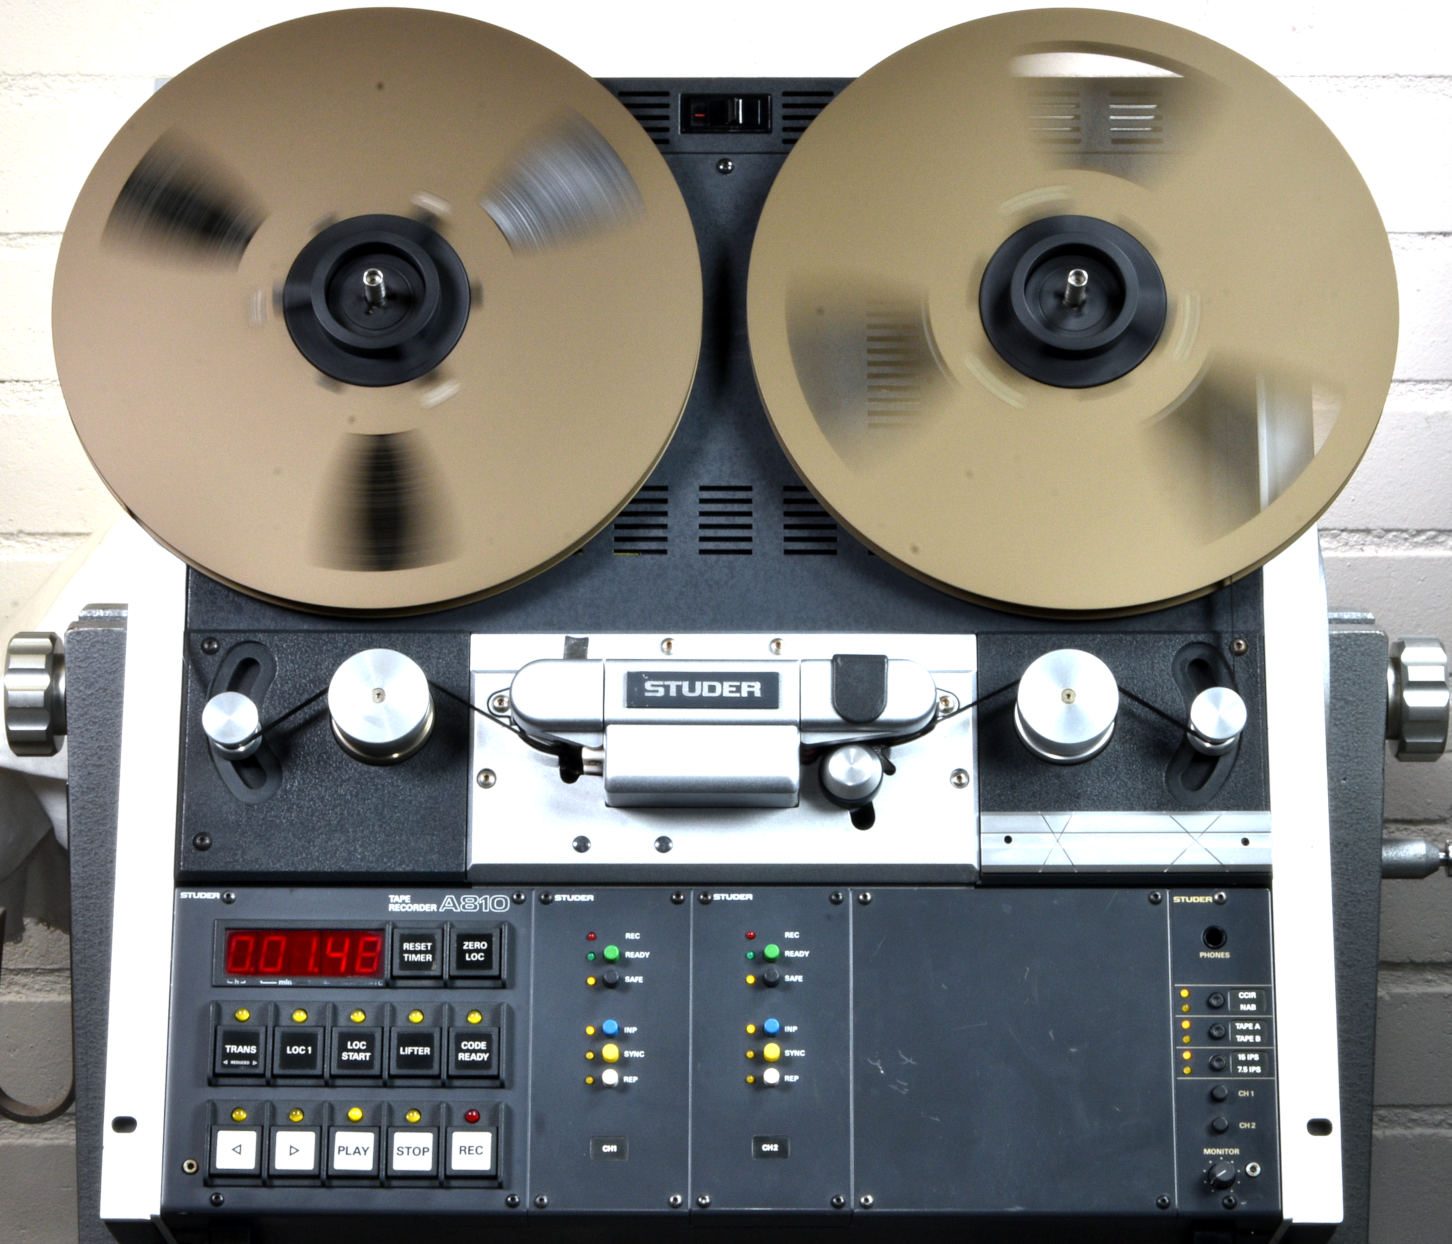 Audio Recorder Reproducer A810 R-Player Studer-Revox;